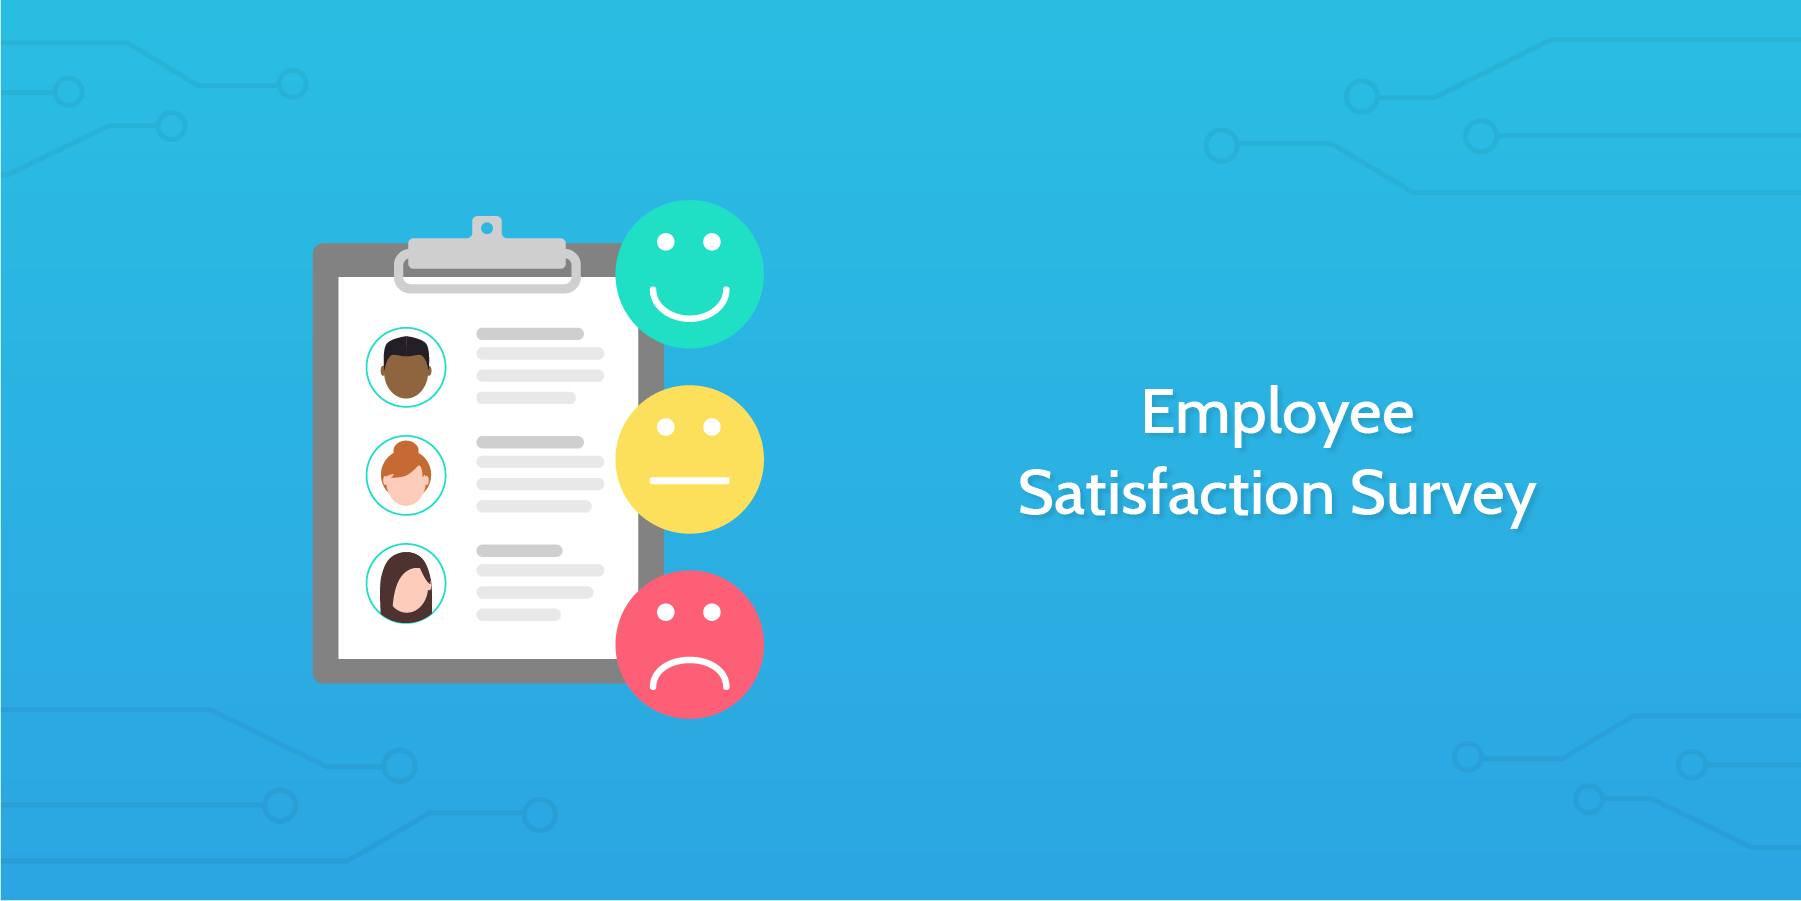 Employees Satisfaction Survey